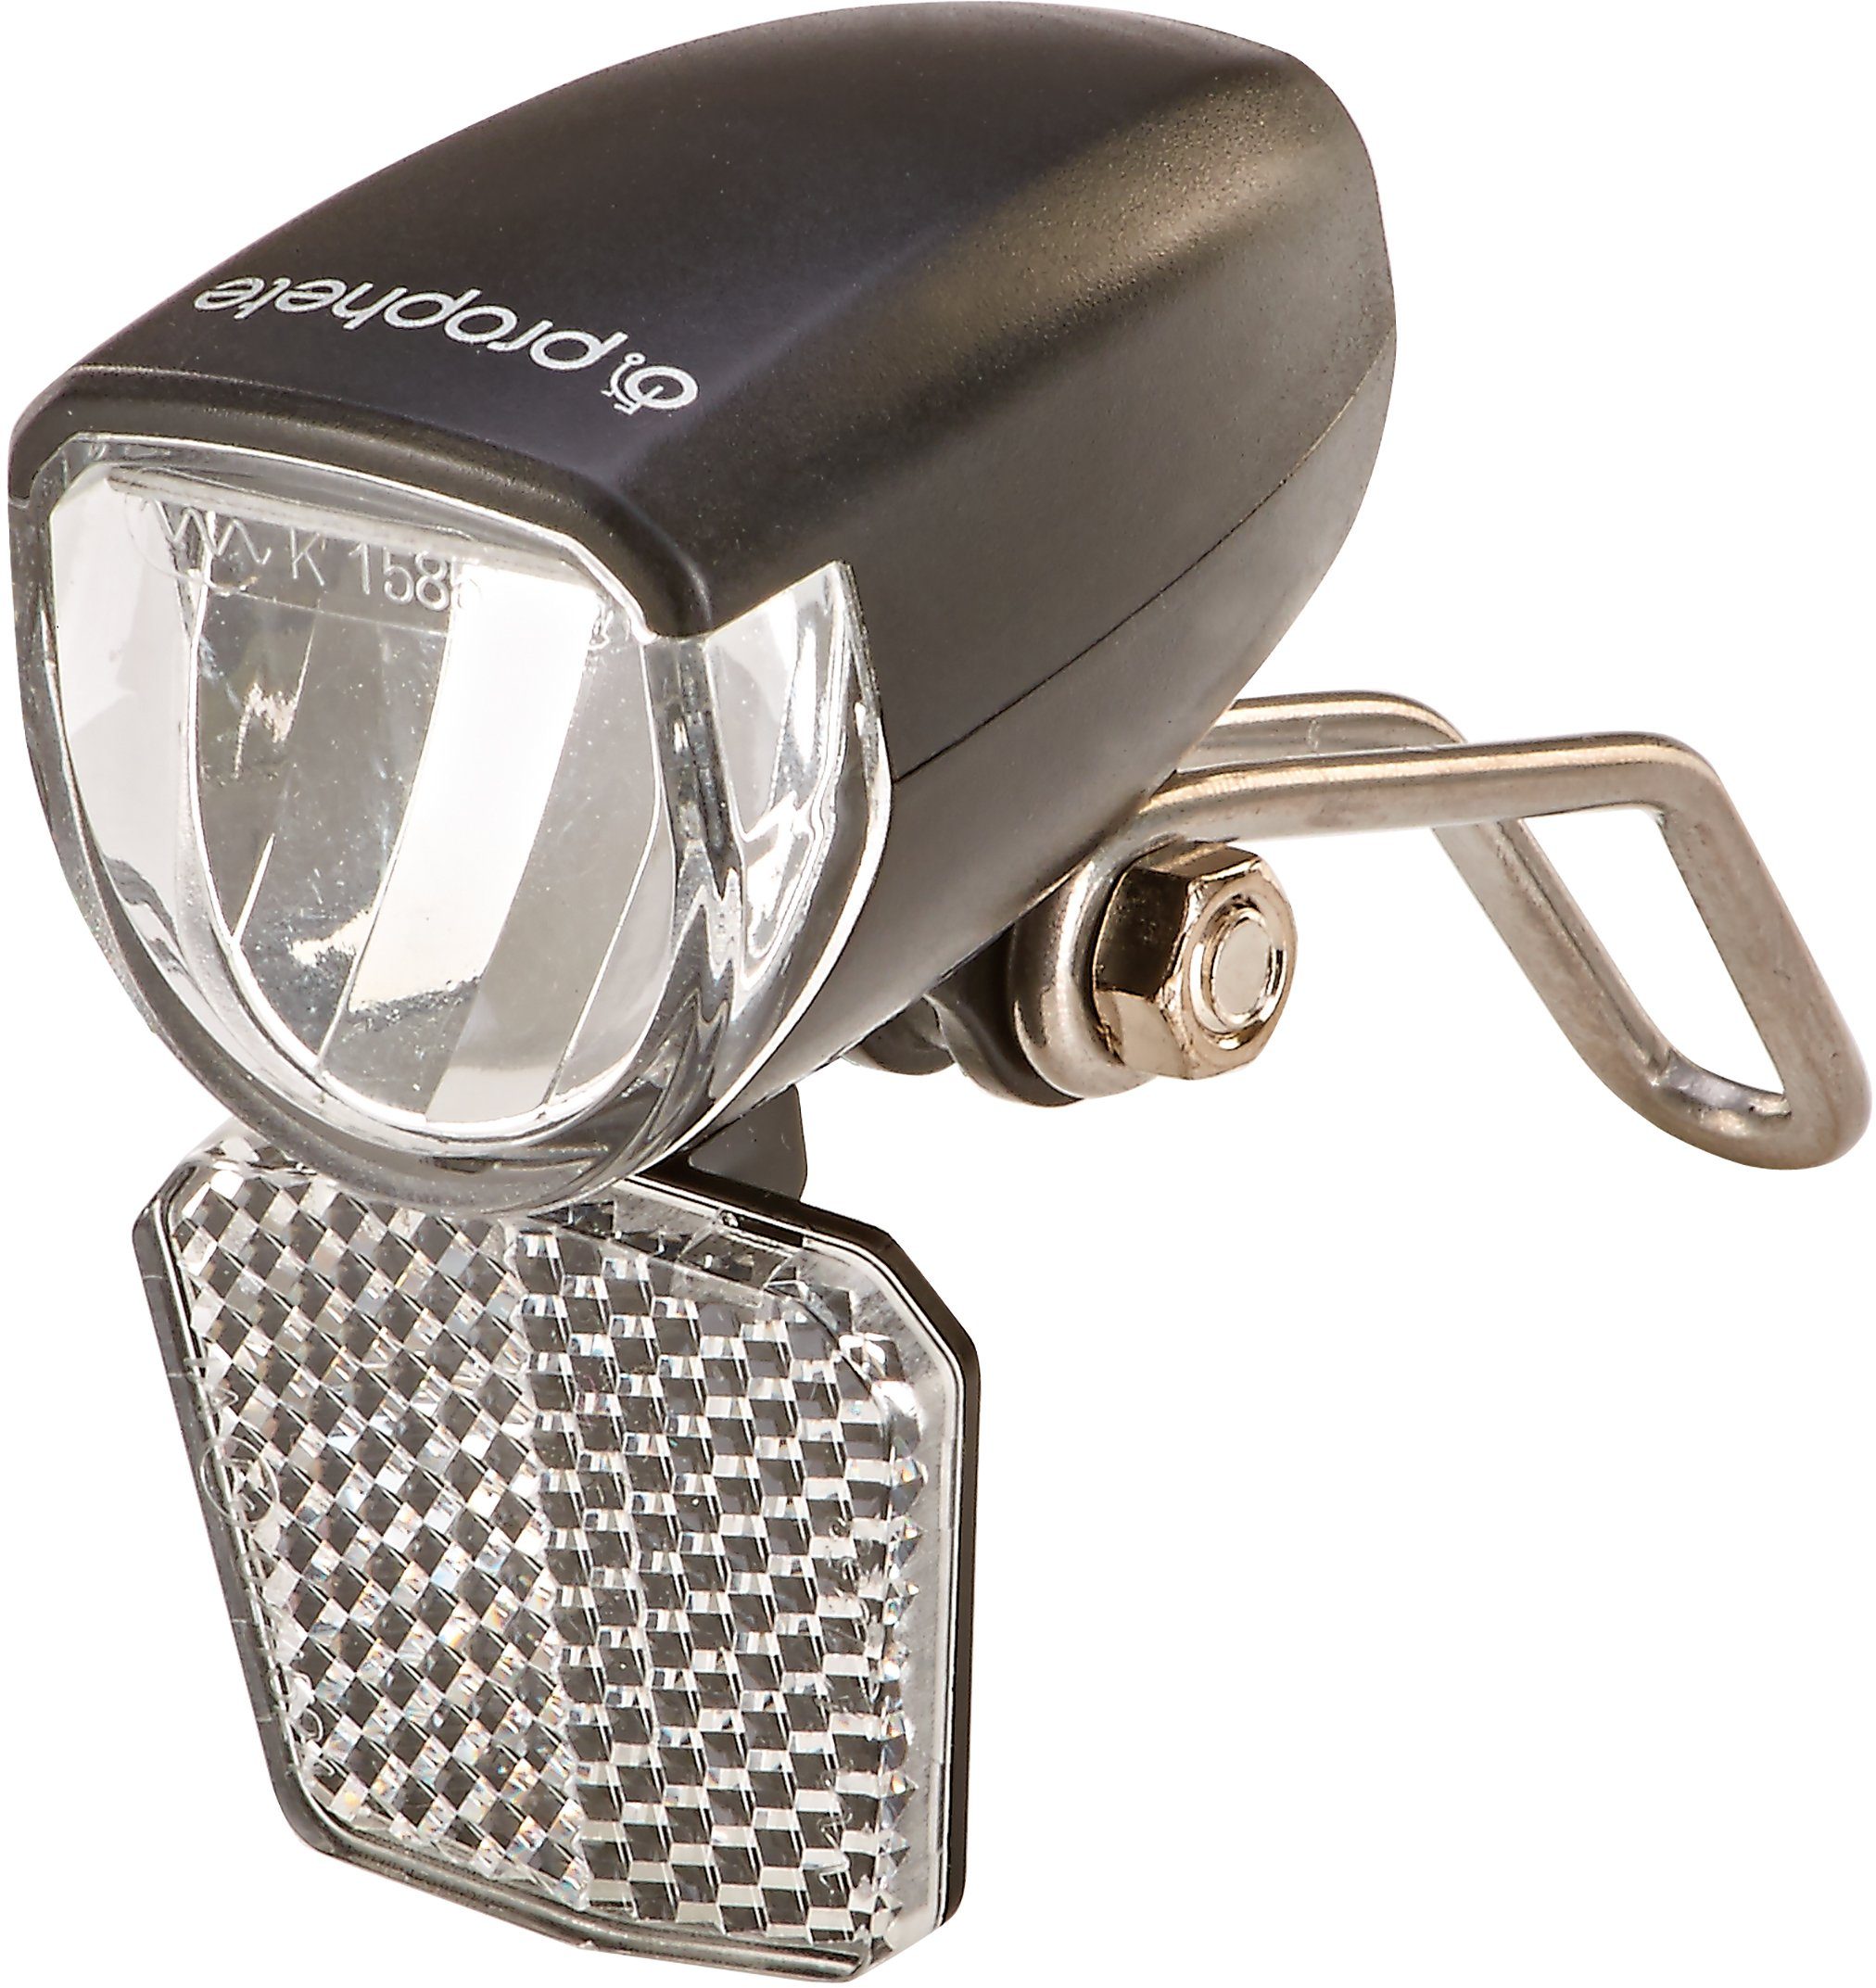 Dynamo Fahrradbeleuchtung-Sets online kaufen | OTTO